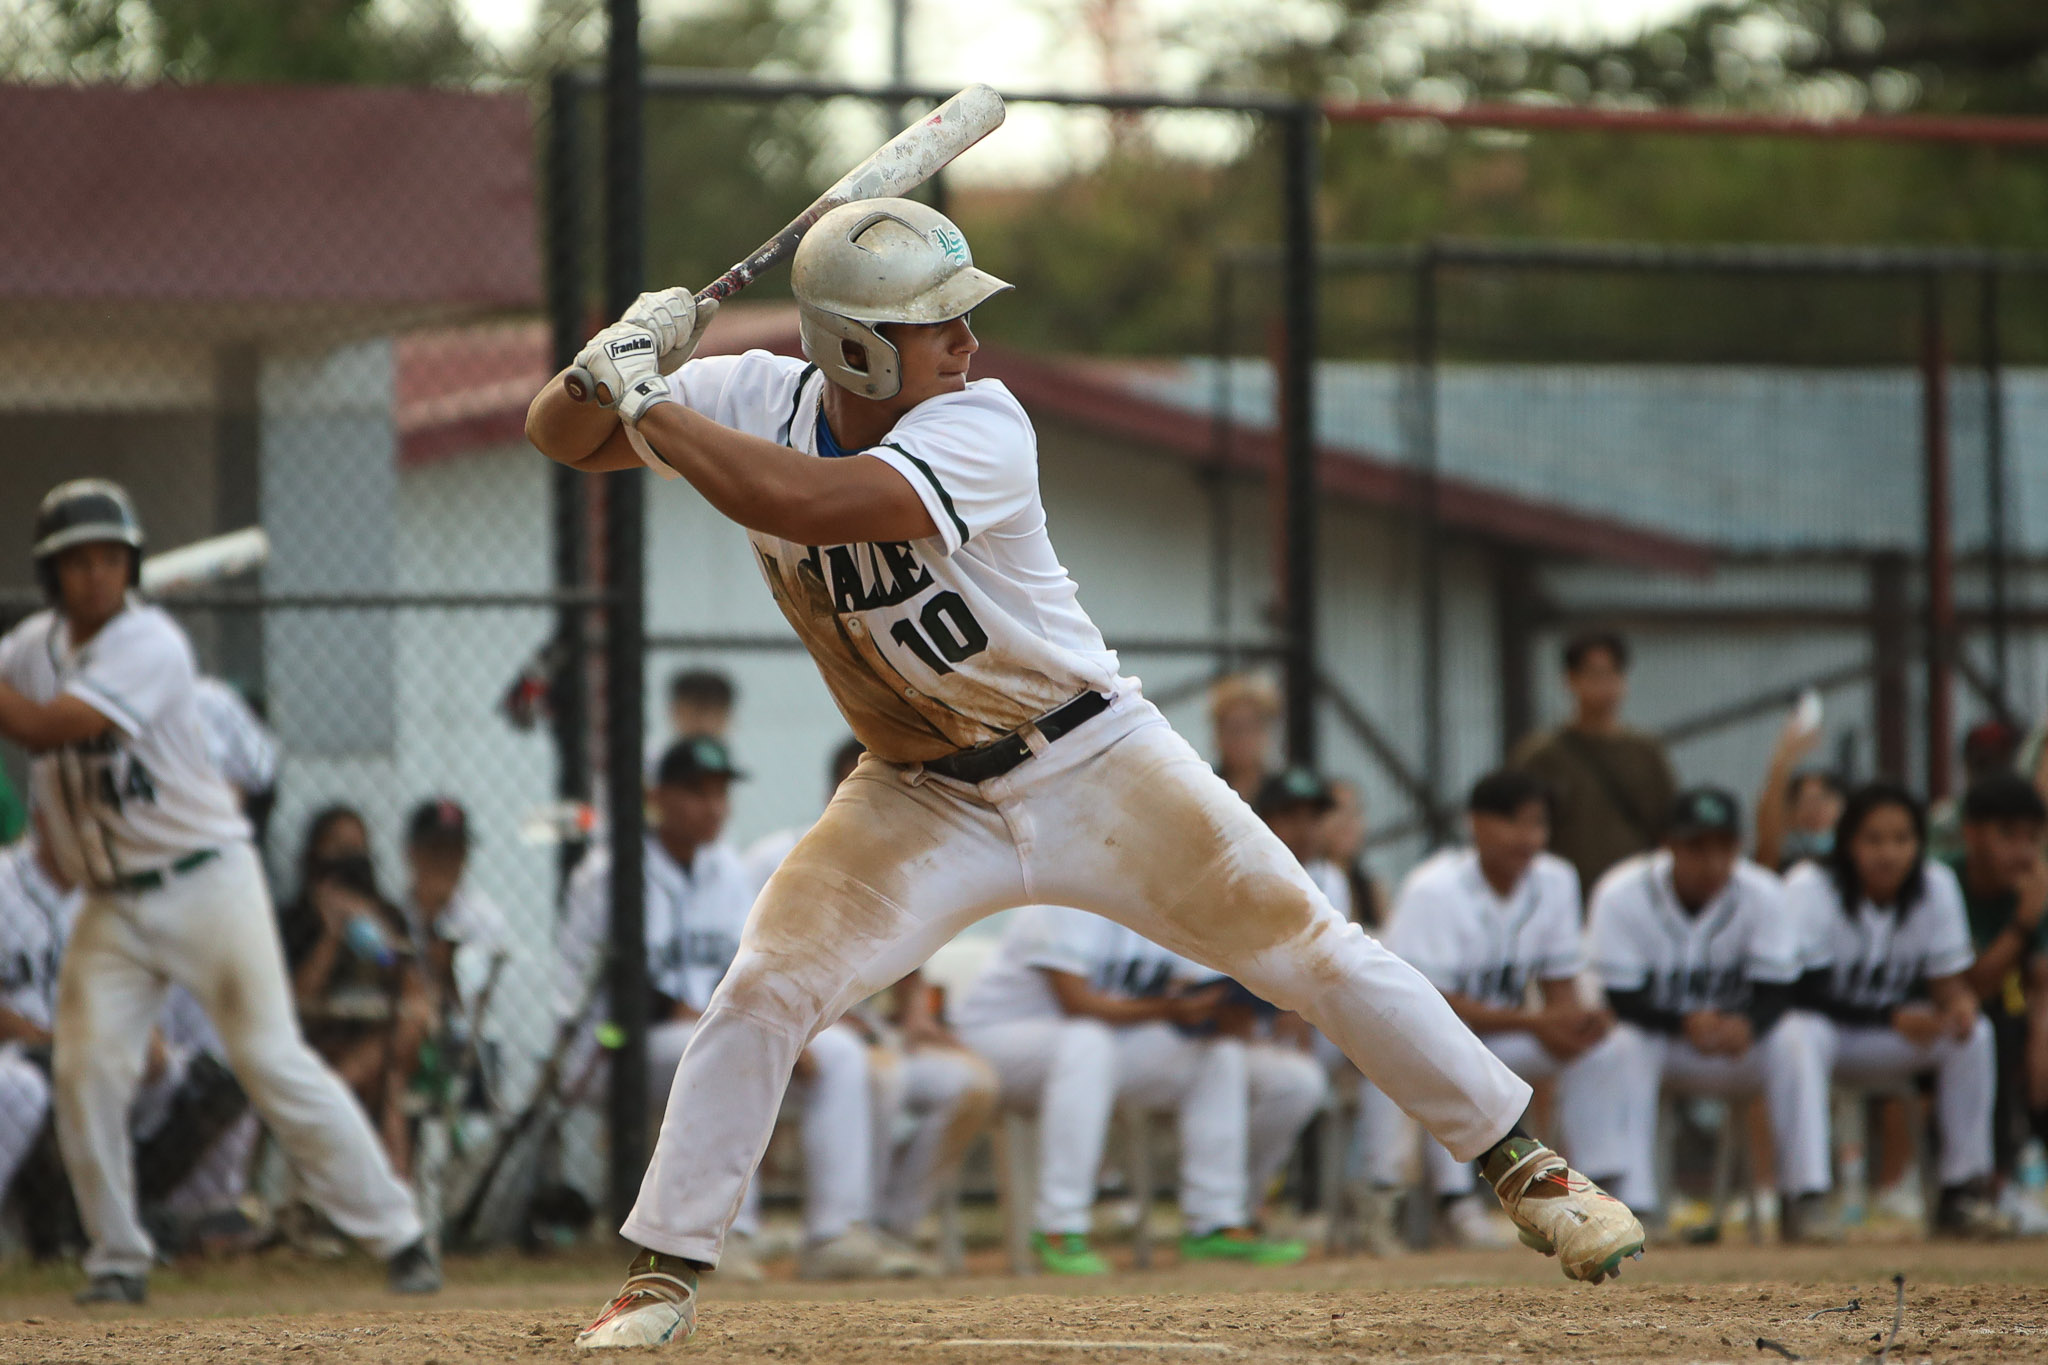 Filipino baseball player Iggy Escaño representing the DLSU Green Batters